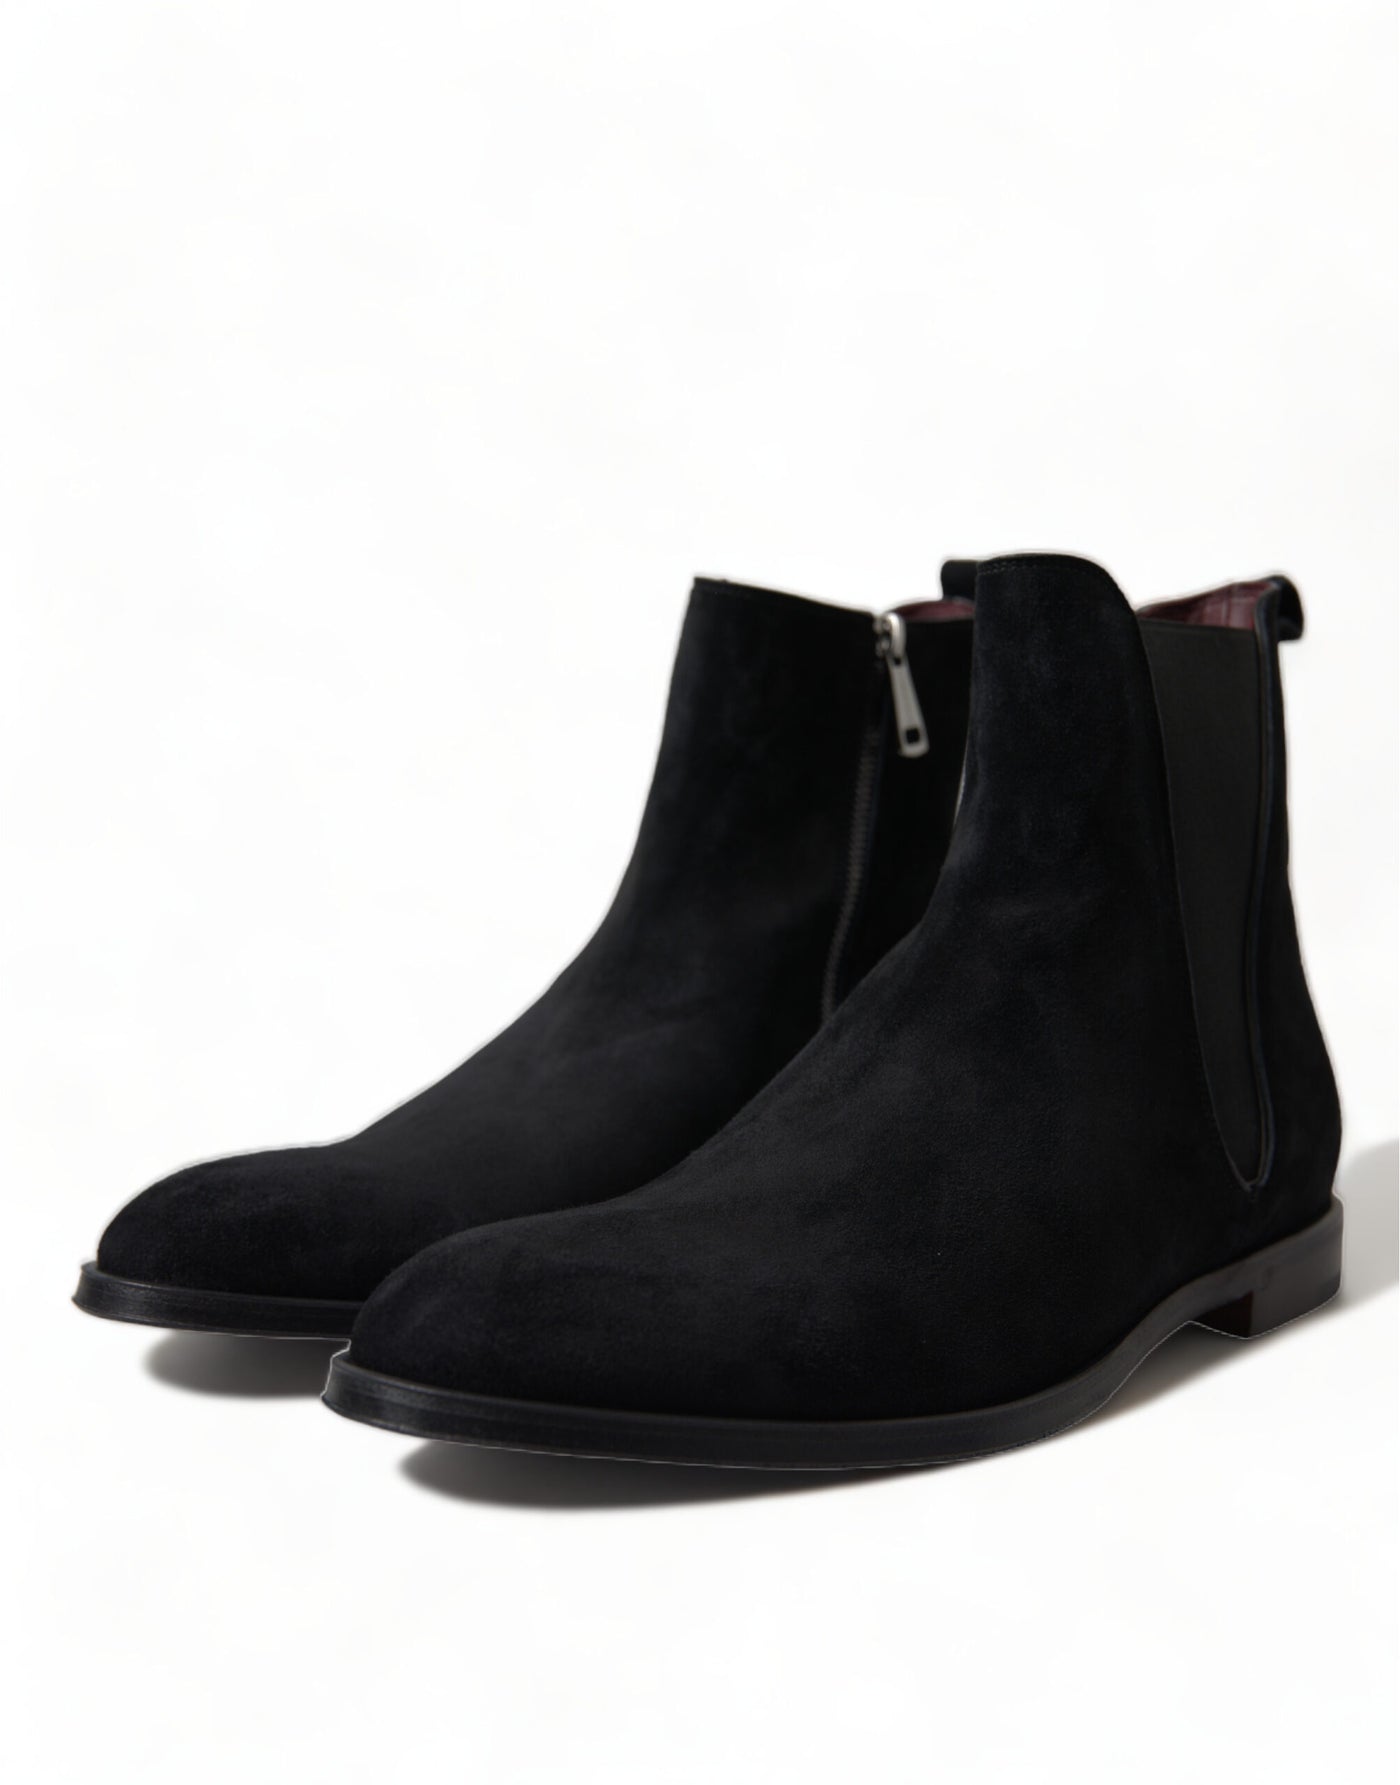 Black Suede Leather Mid Calf Men Boots Shoes